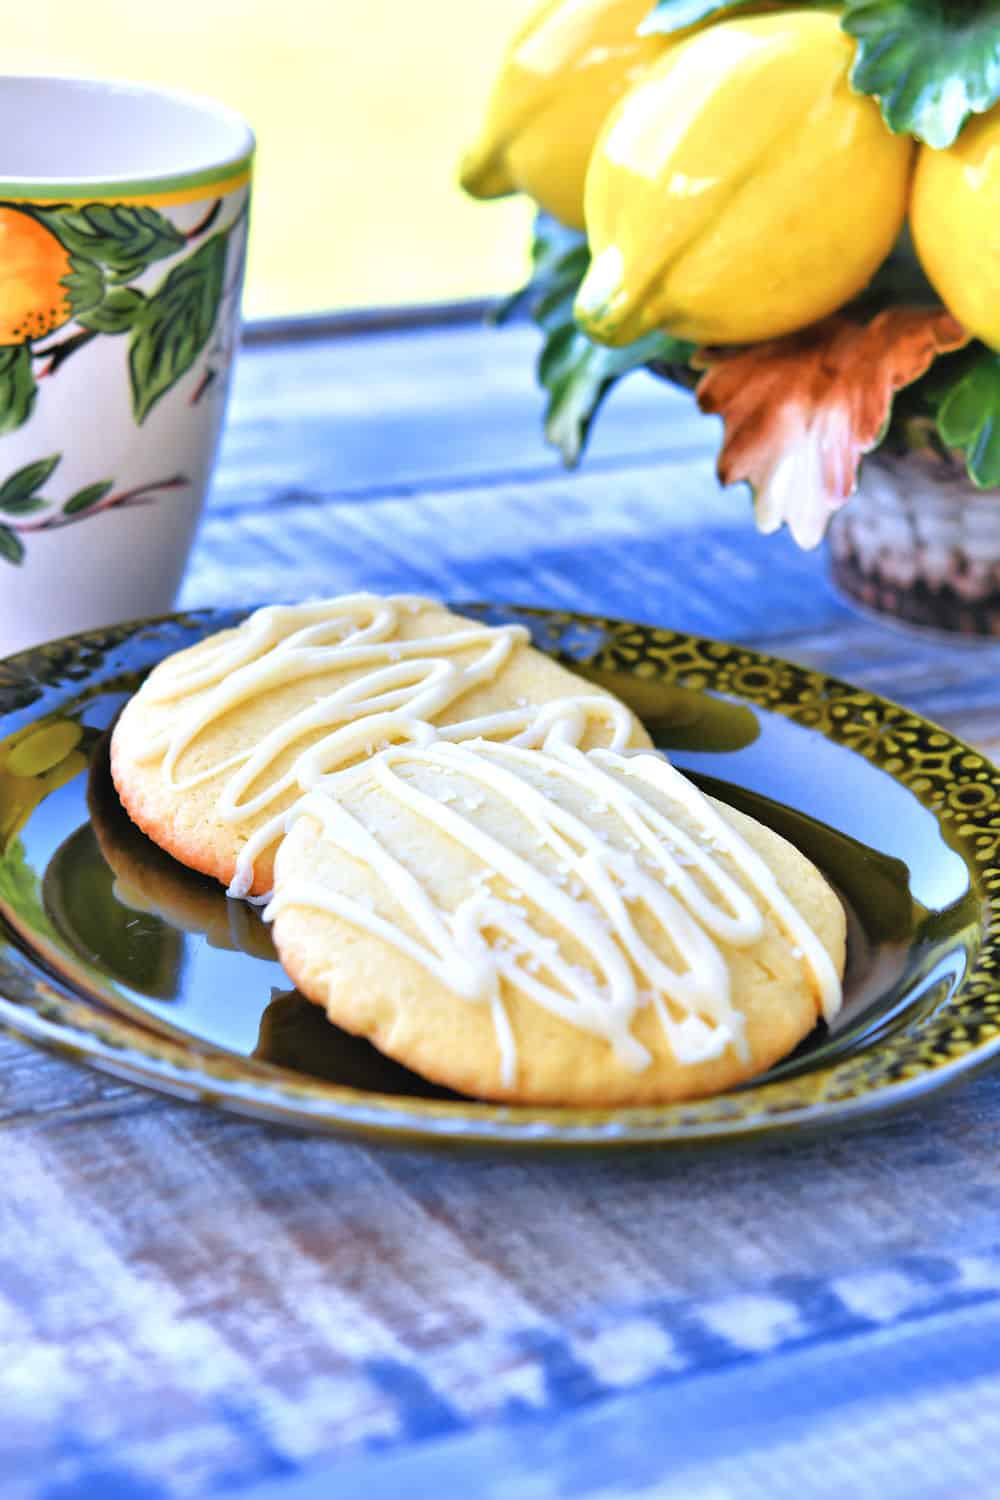 24Bite: Lemon Sugar Cookies with White Chocolate Drizzle by Christian Guzman